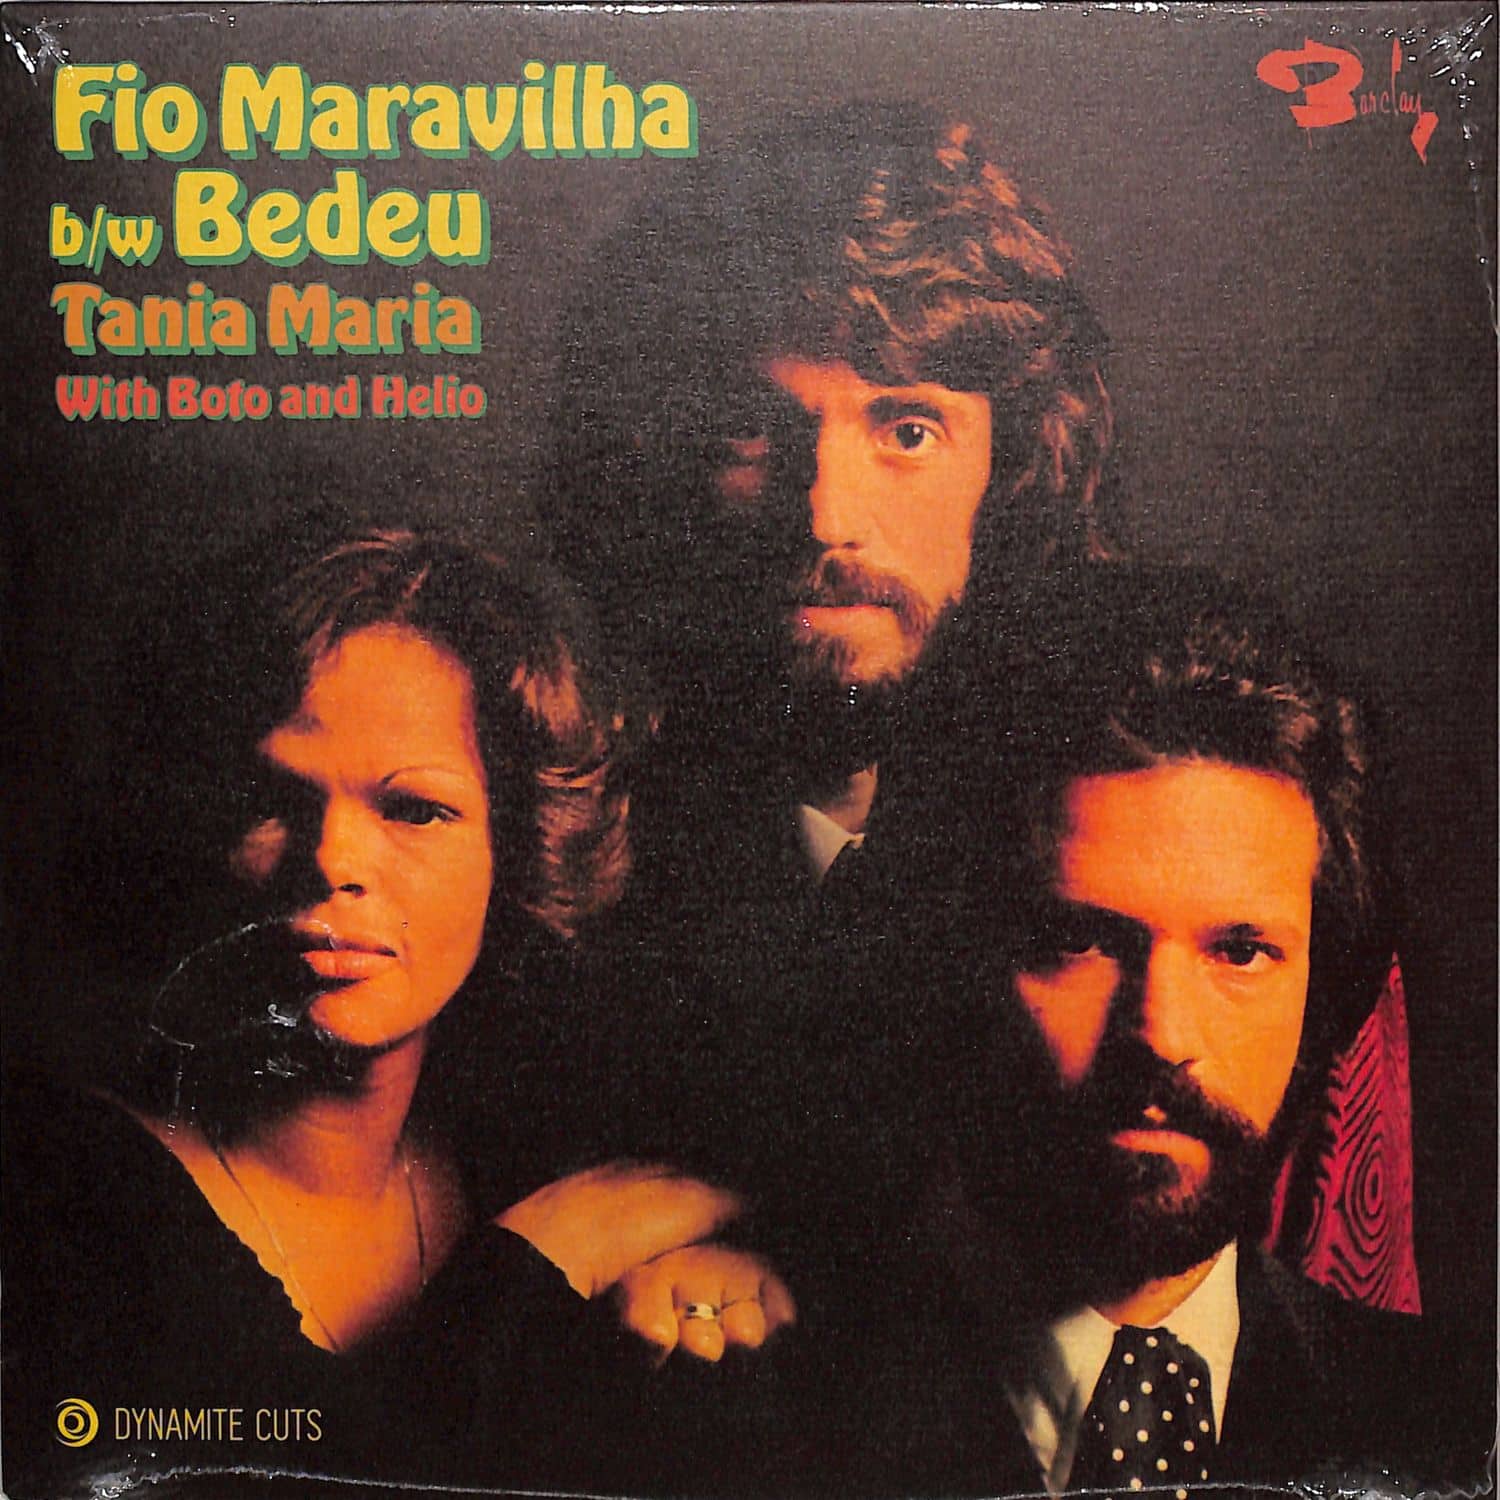 Tania Maria With Bob And Hello - FIO MARAVILHA / BEDEU 